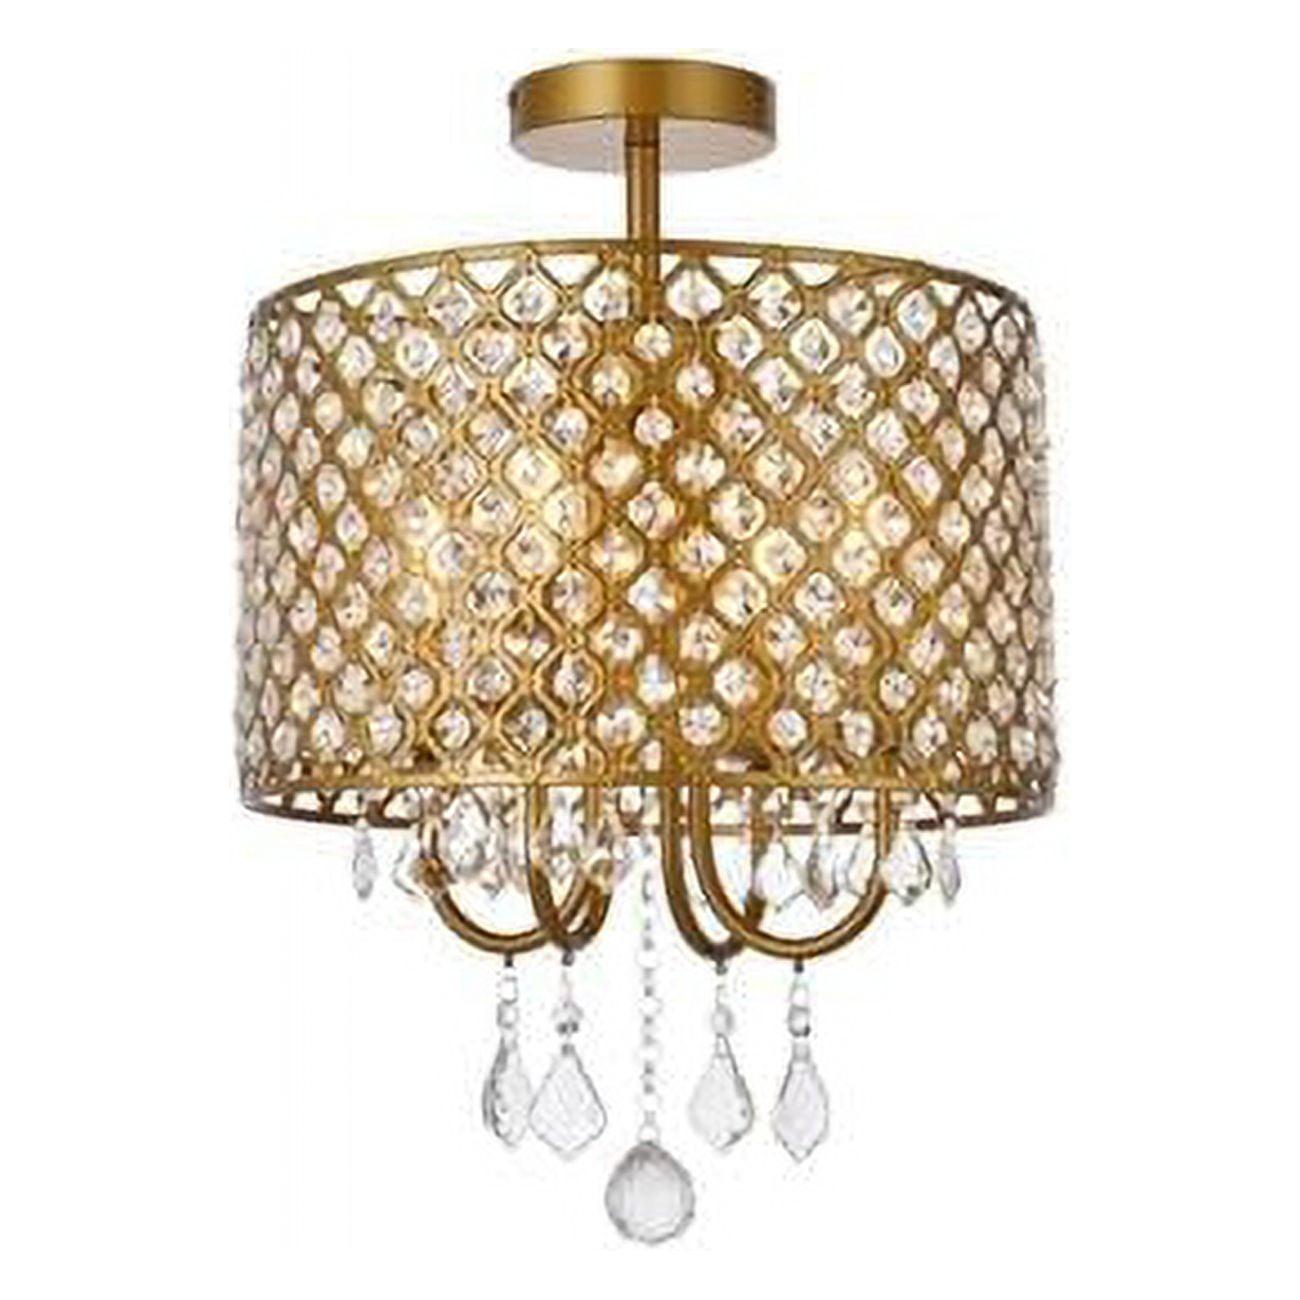 Elegant Brass and Crystal 14" Flush Mount Ceiling Light